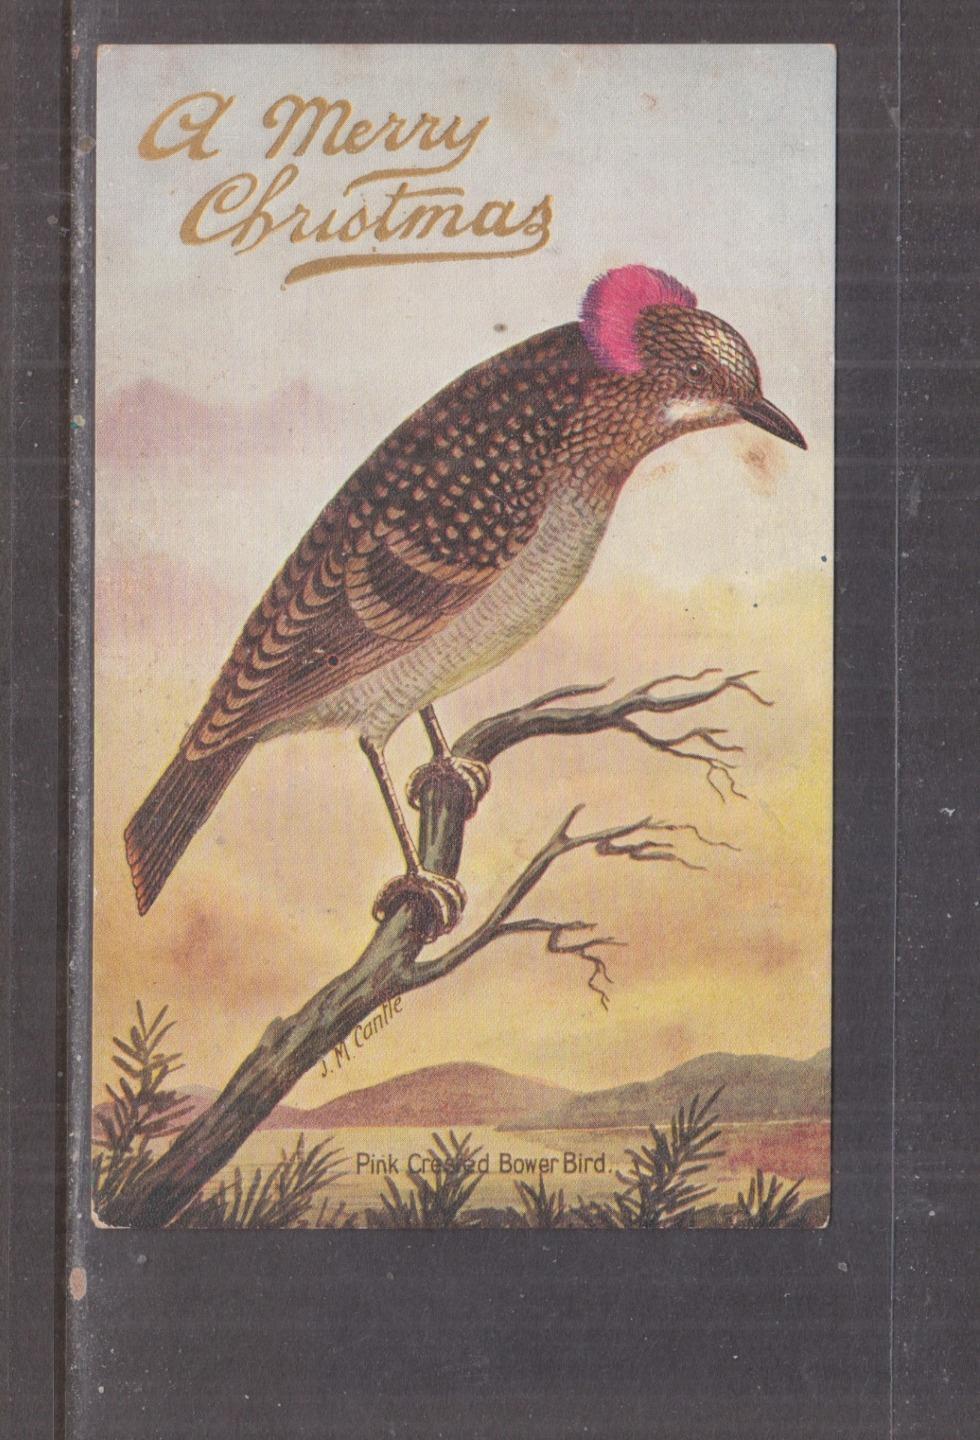 AUSTRALIA, PINK CRESTED BOWER BIRD on BRANCH, c1910 Xmas ppc., unused.